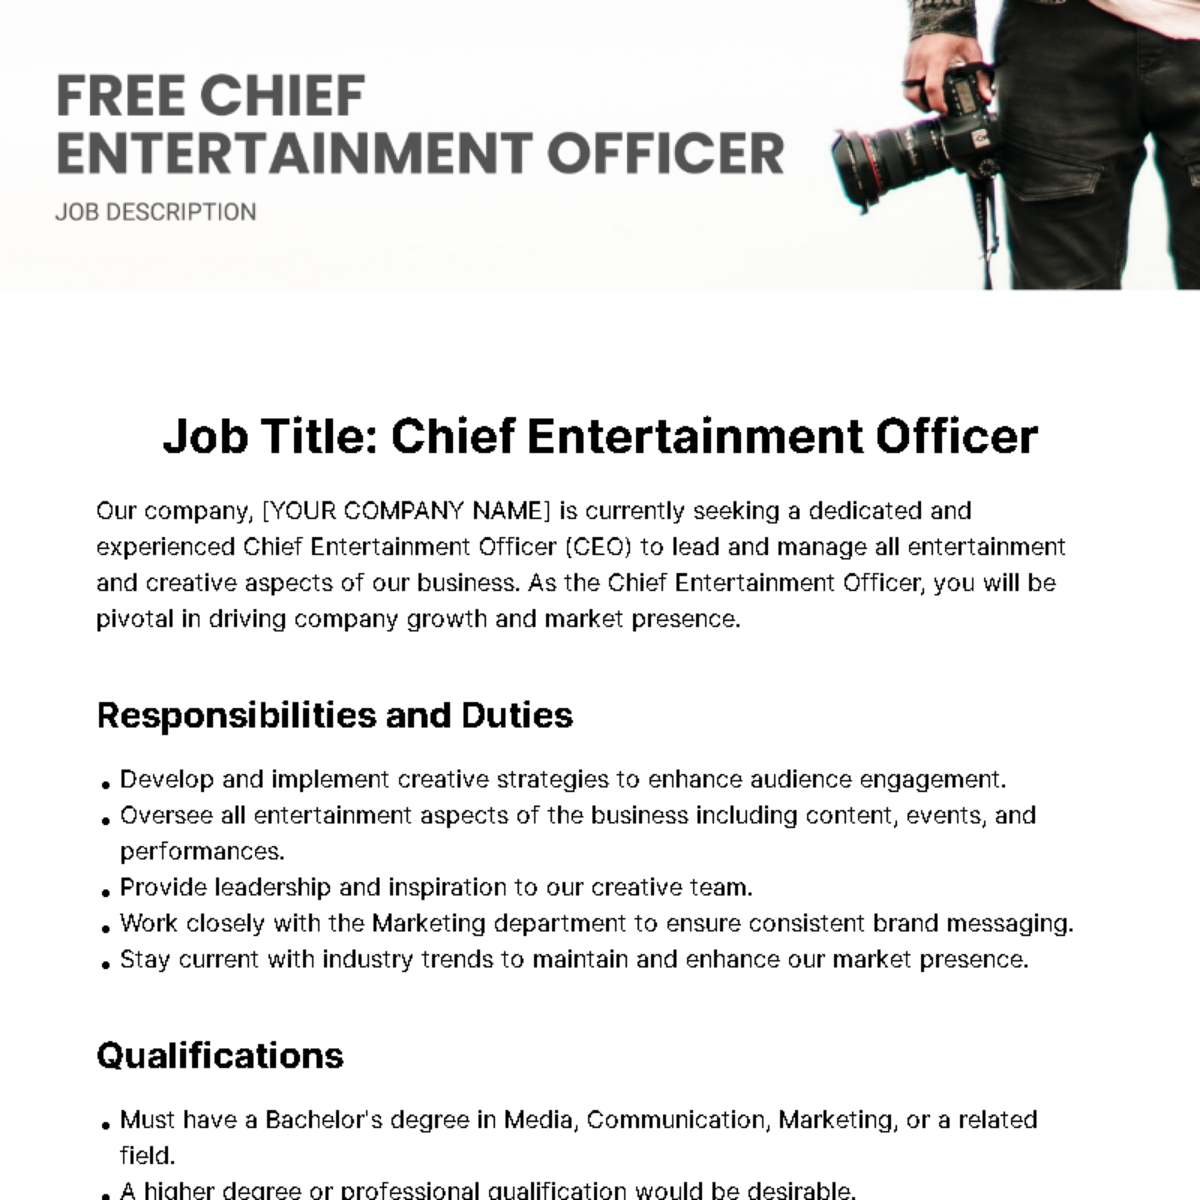 Free Chief Entertainment Officer Job Description Template